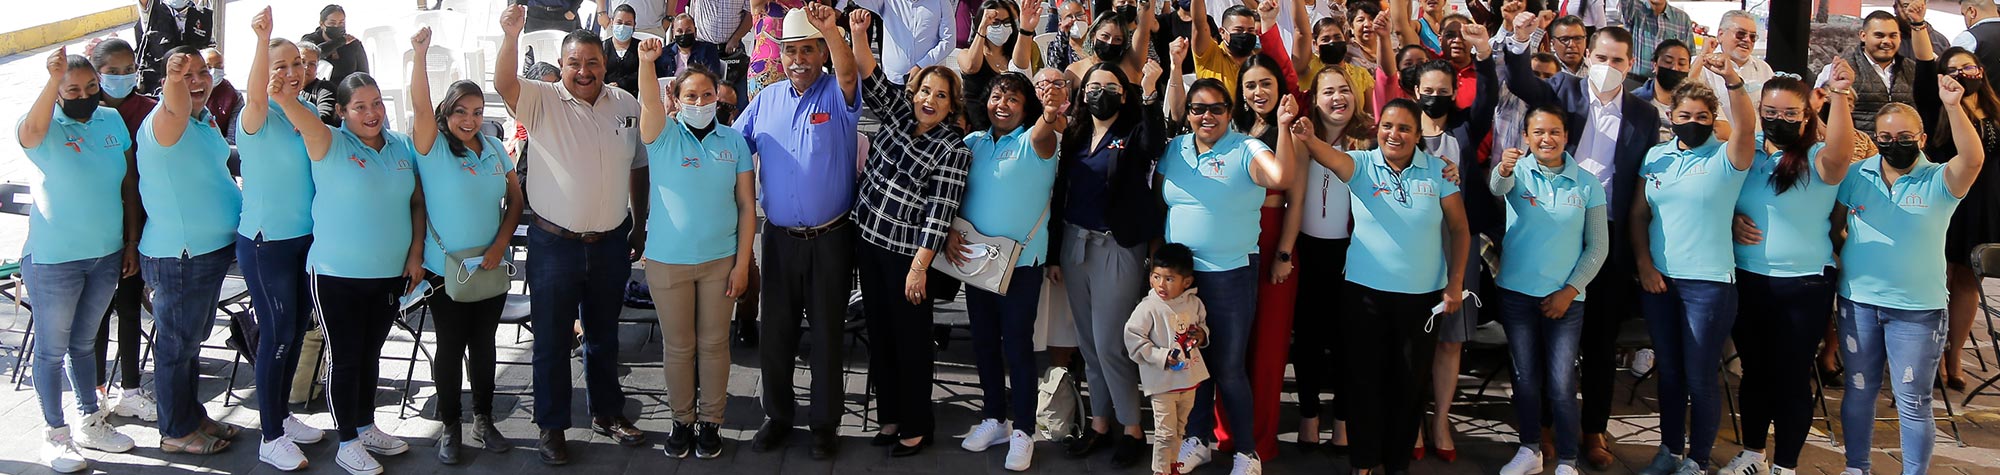 Madrinas DEACERO launched in Guanajuato